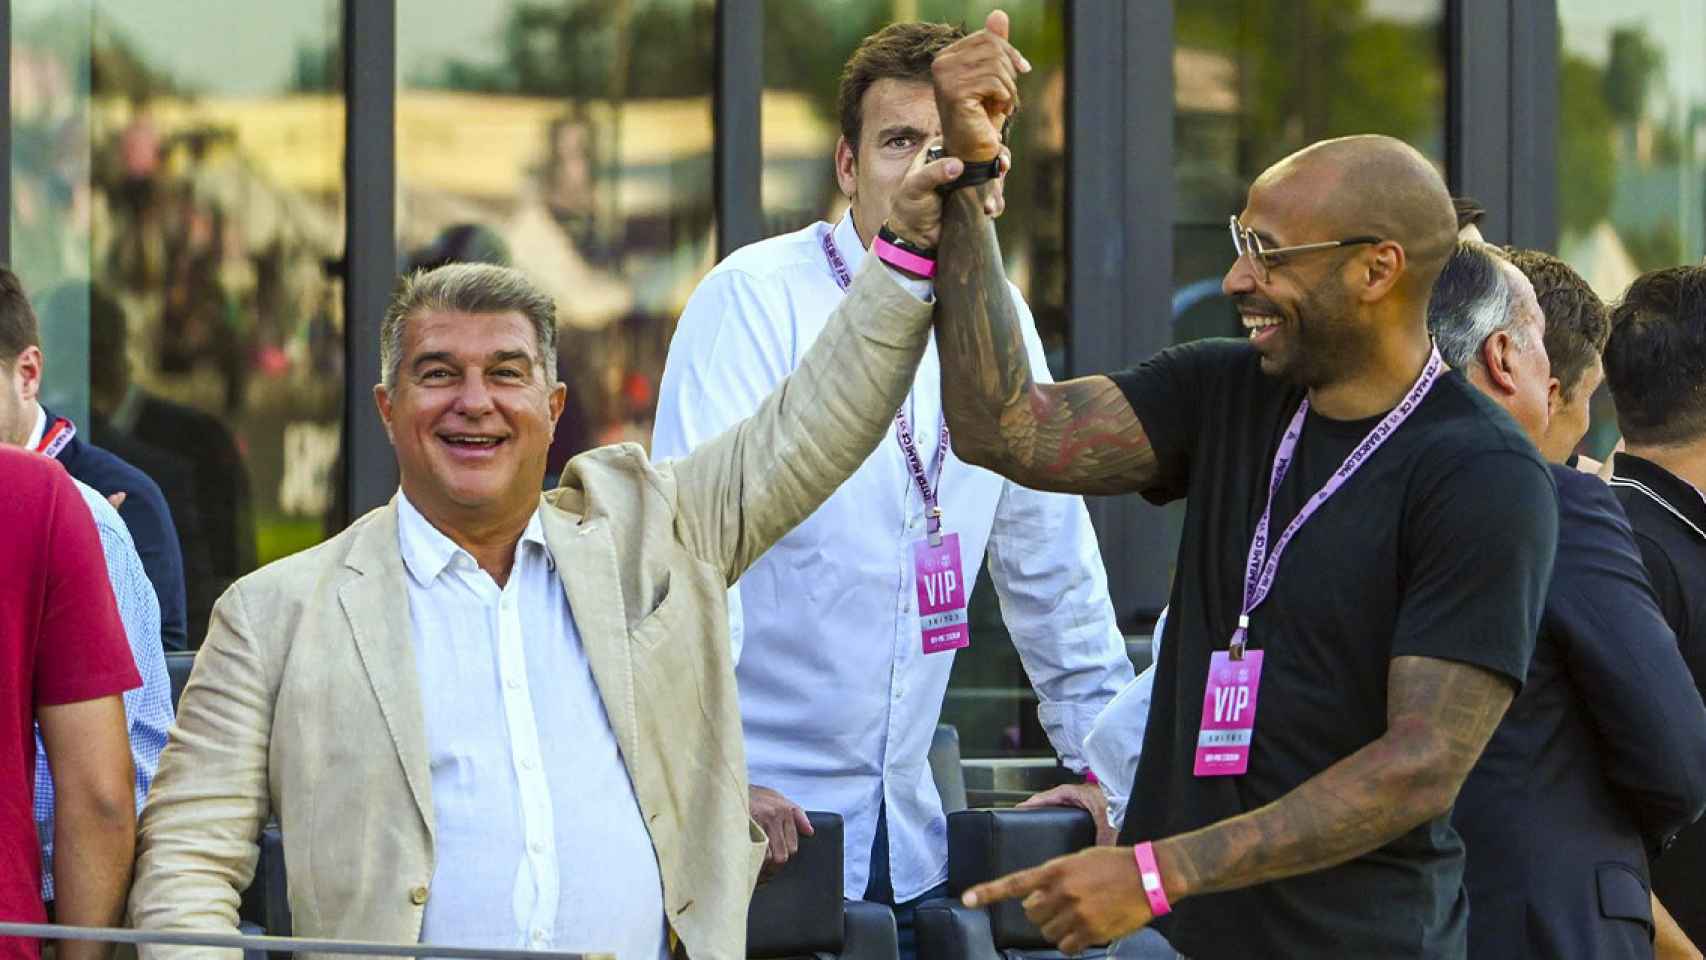 Joan Laporta levanta el brazo de Thierry Henry, triunfal, en la gira americana del Barça / EFE